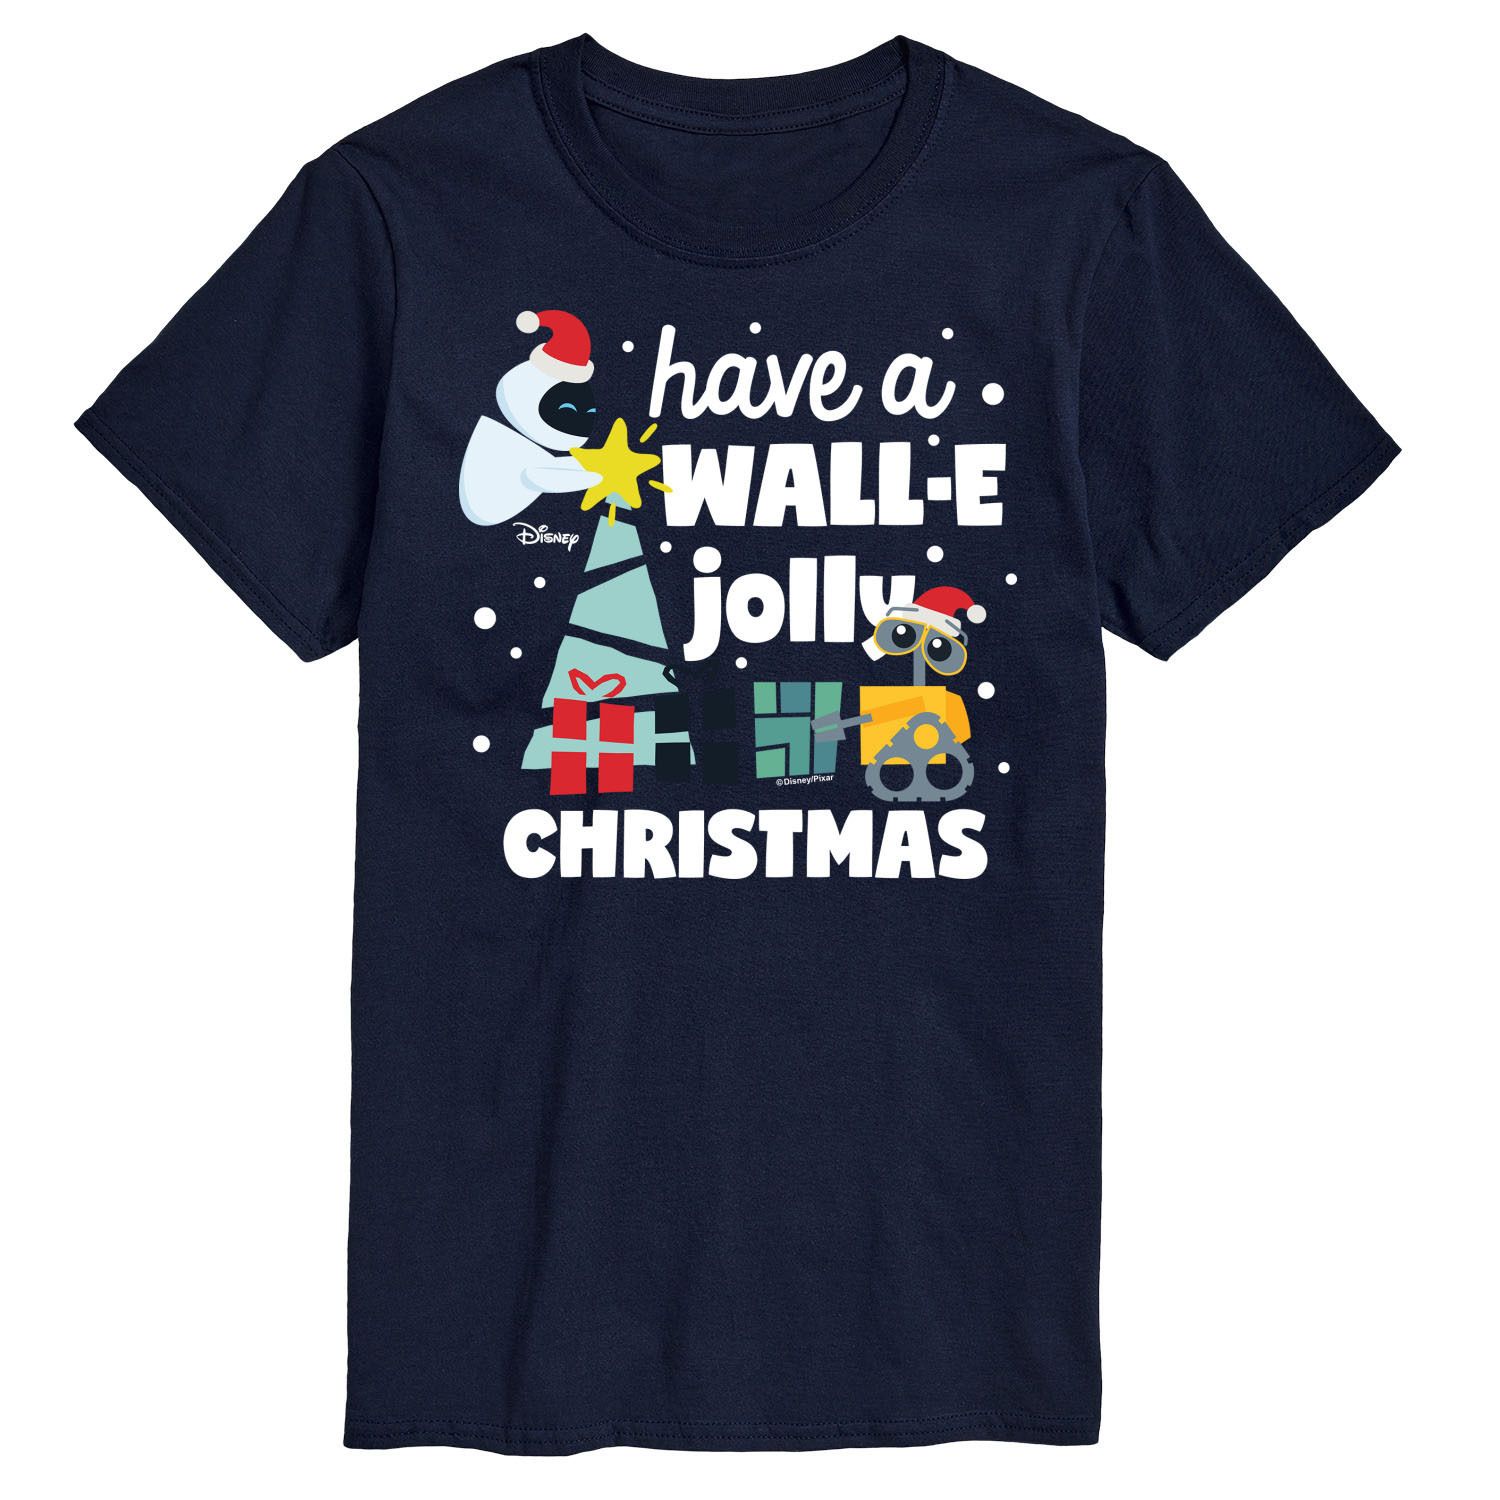 Футболка's Wall-E Big & Tall Jolly Christmas с рисунком Disney, синий